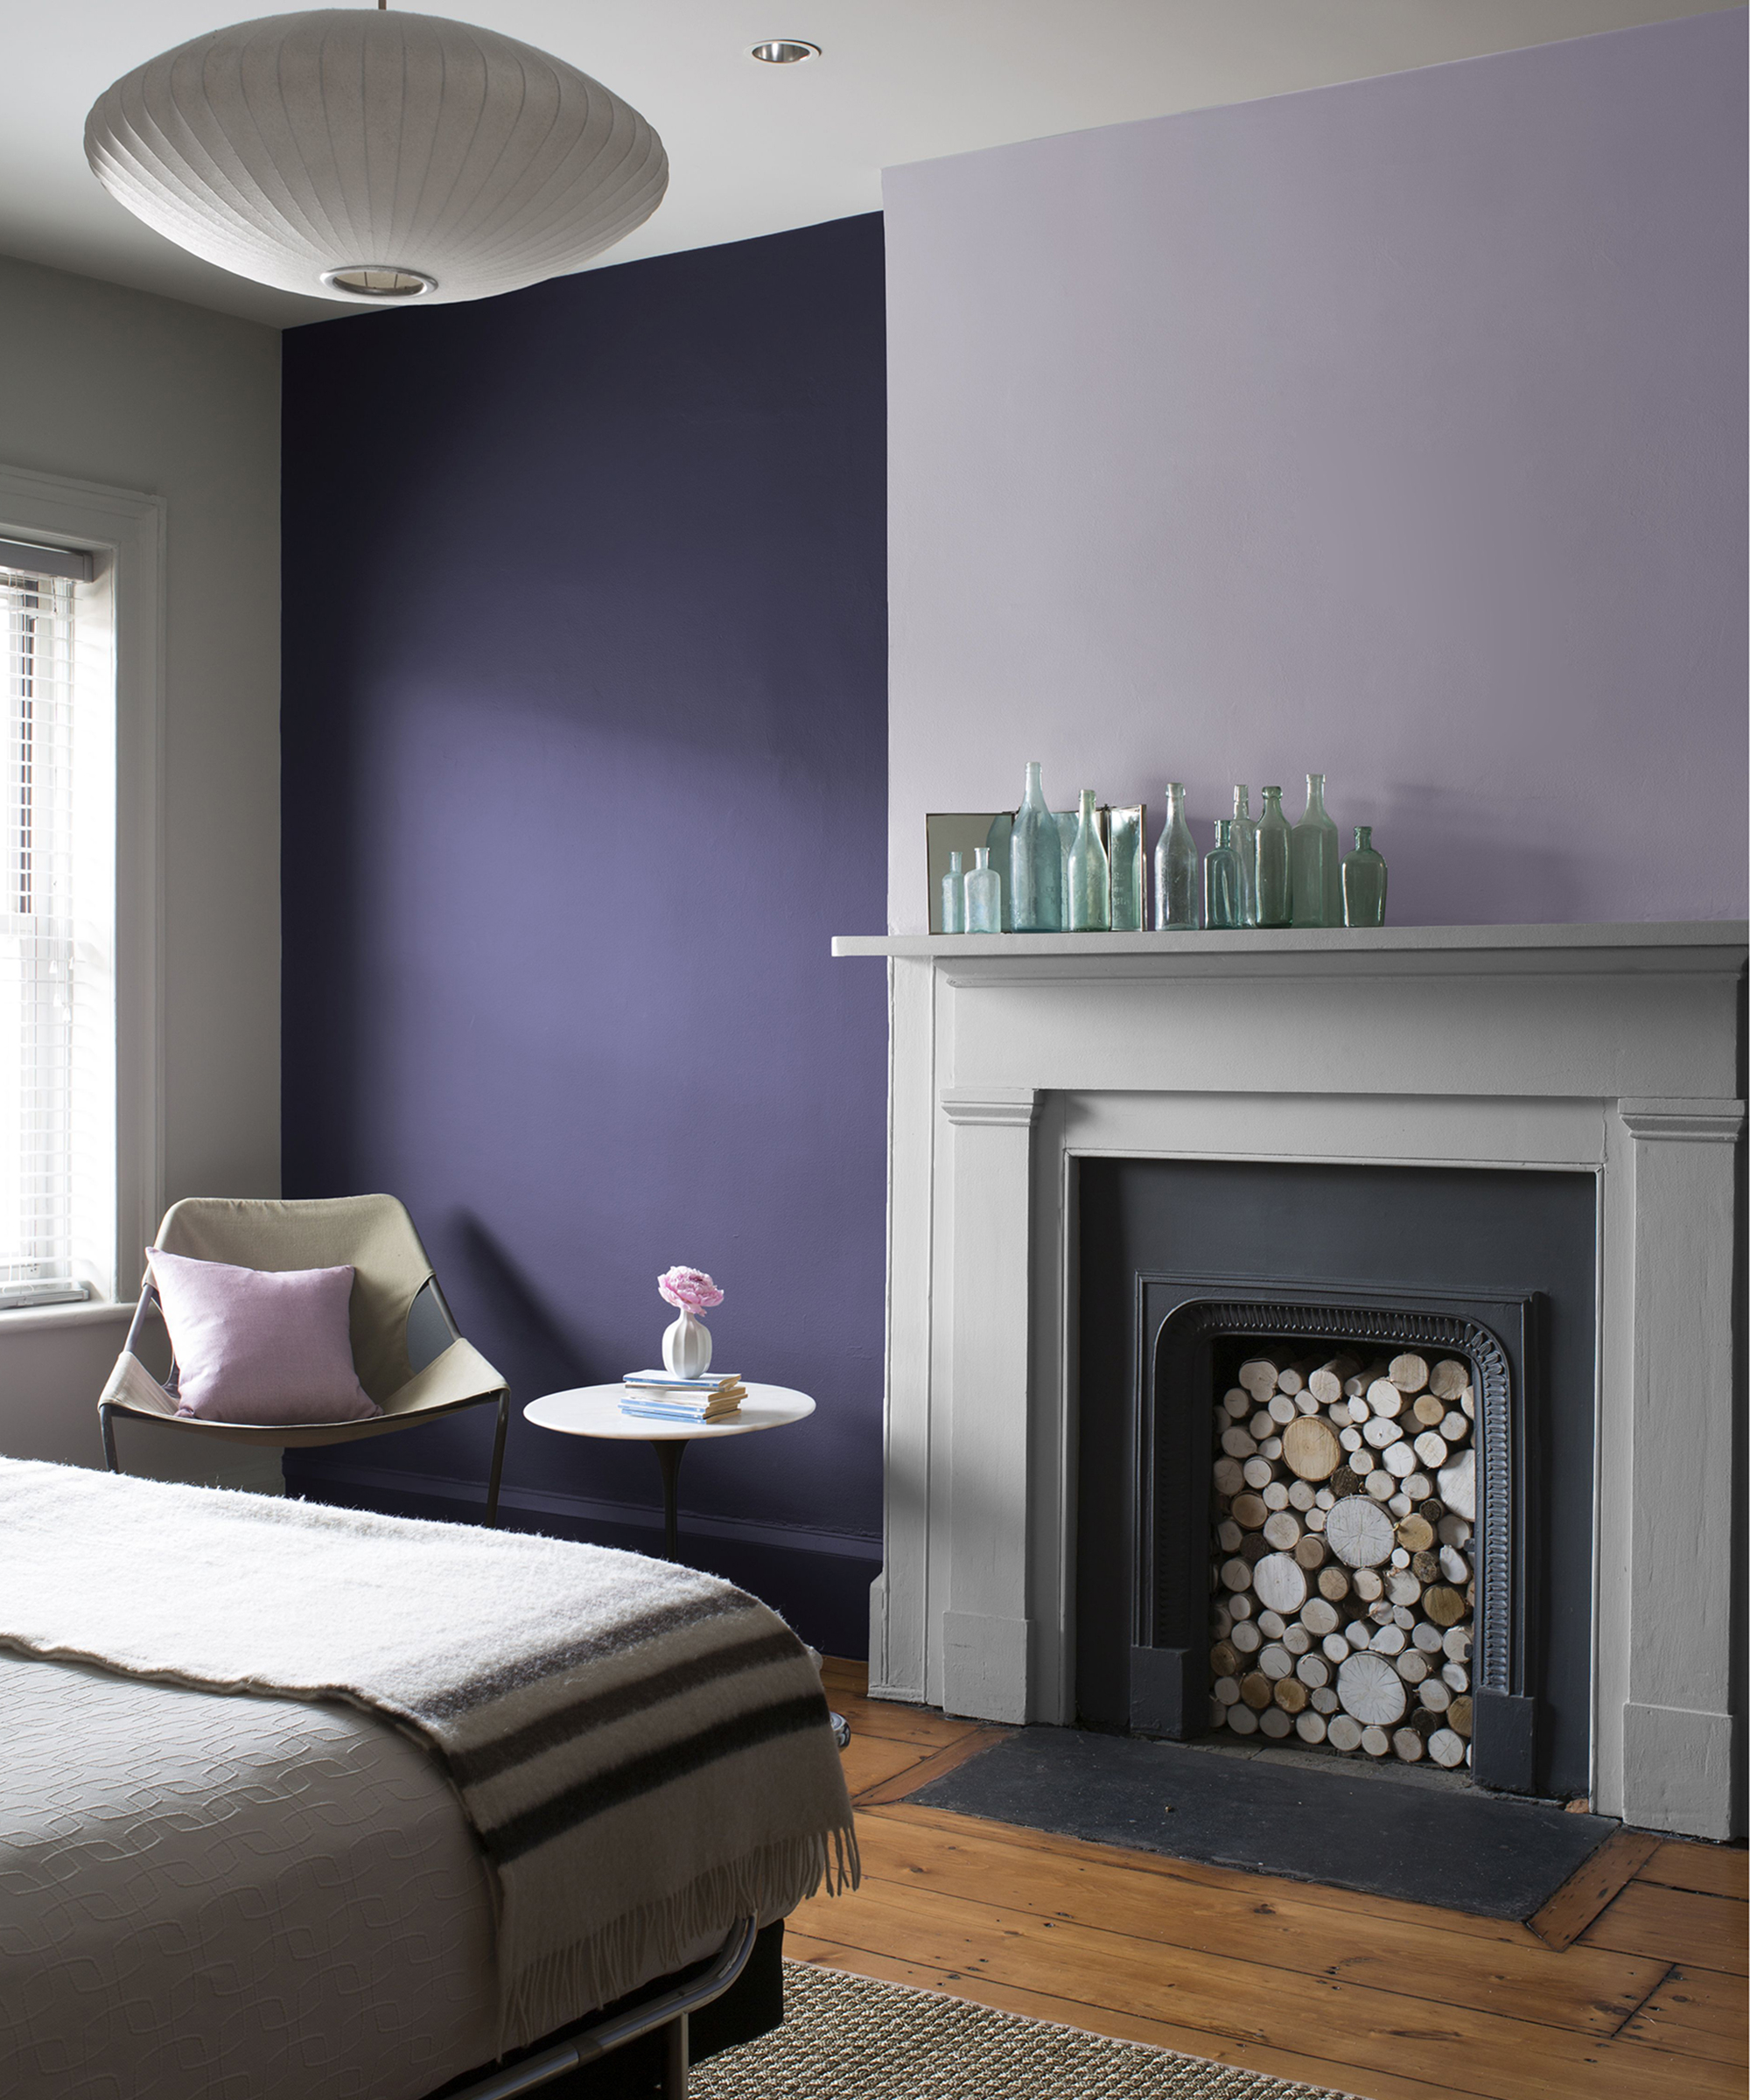 A dark purple and lilac bedroom by Benjamin Moore using Benjamin Moore Aura Matte Dark Lilac 2070- 30, Aura Matte Lavender Mist 2070-60